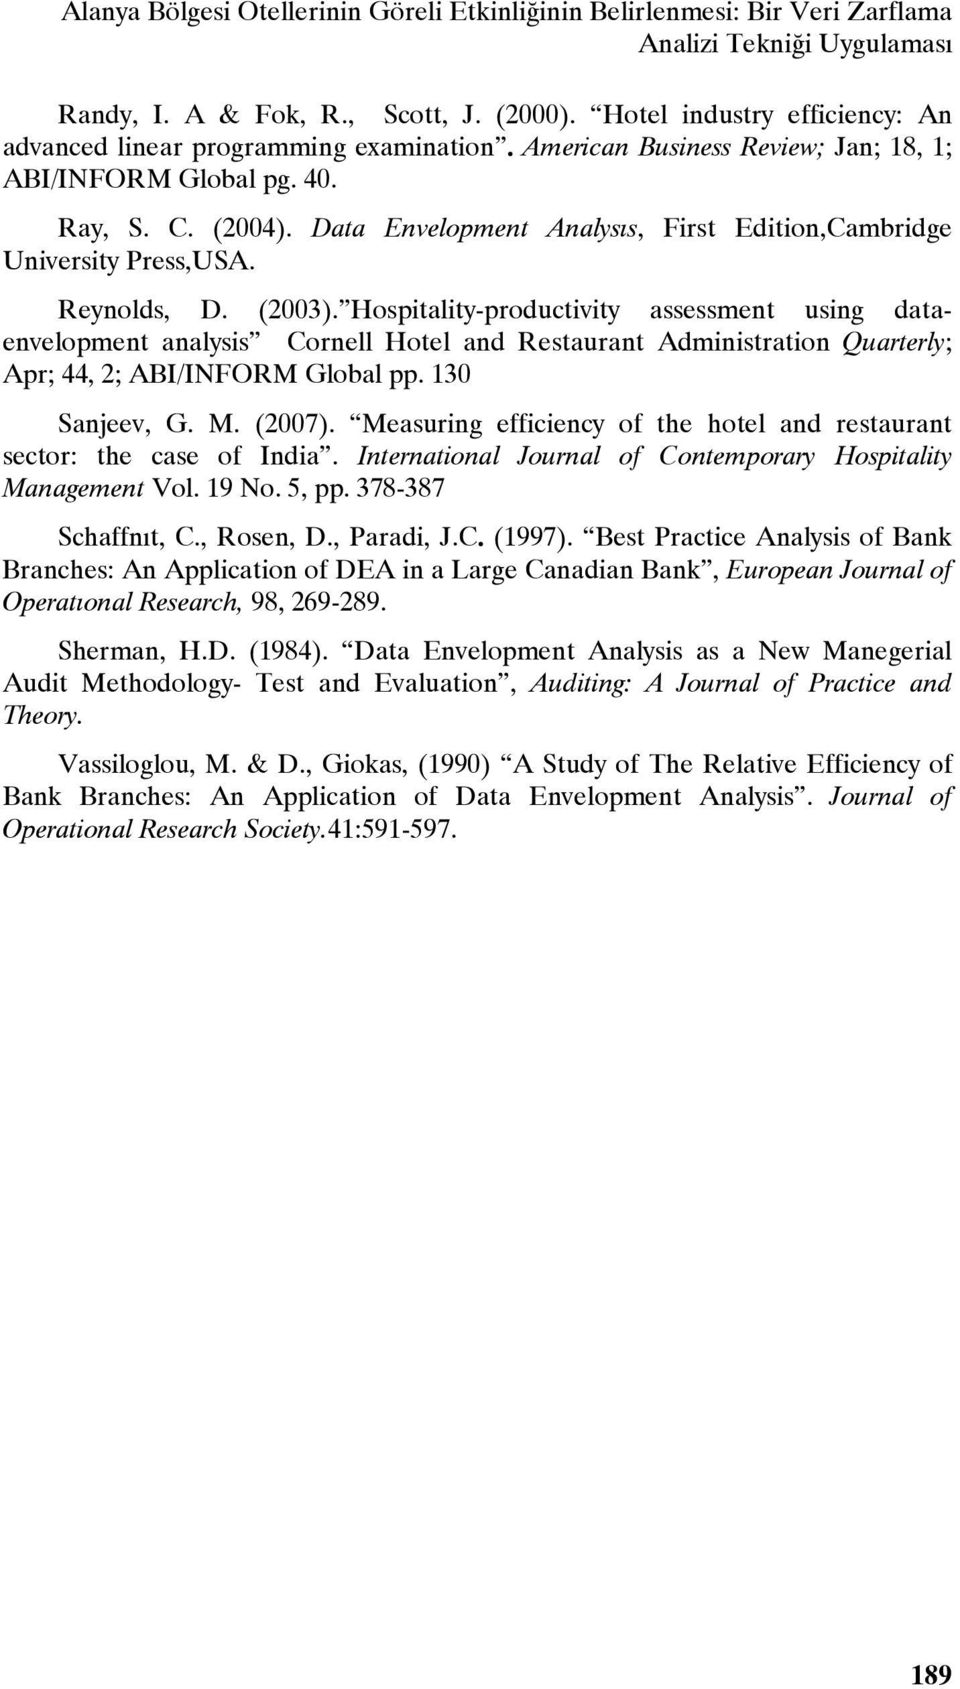 Data Envelopment Analysıs, First Edition,Cambridge University Press,USA. Reynolds, D. (2003).